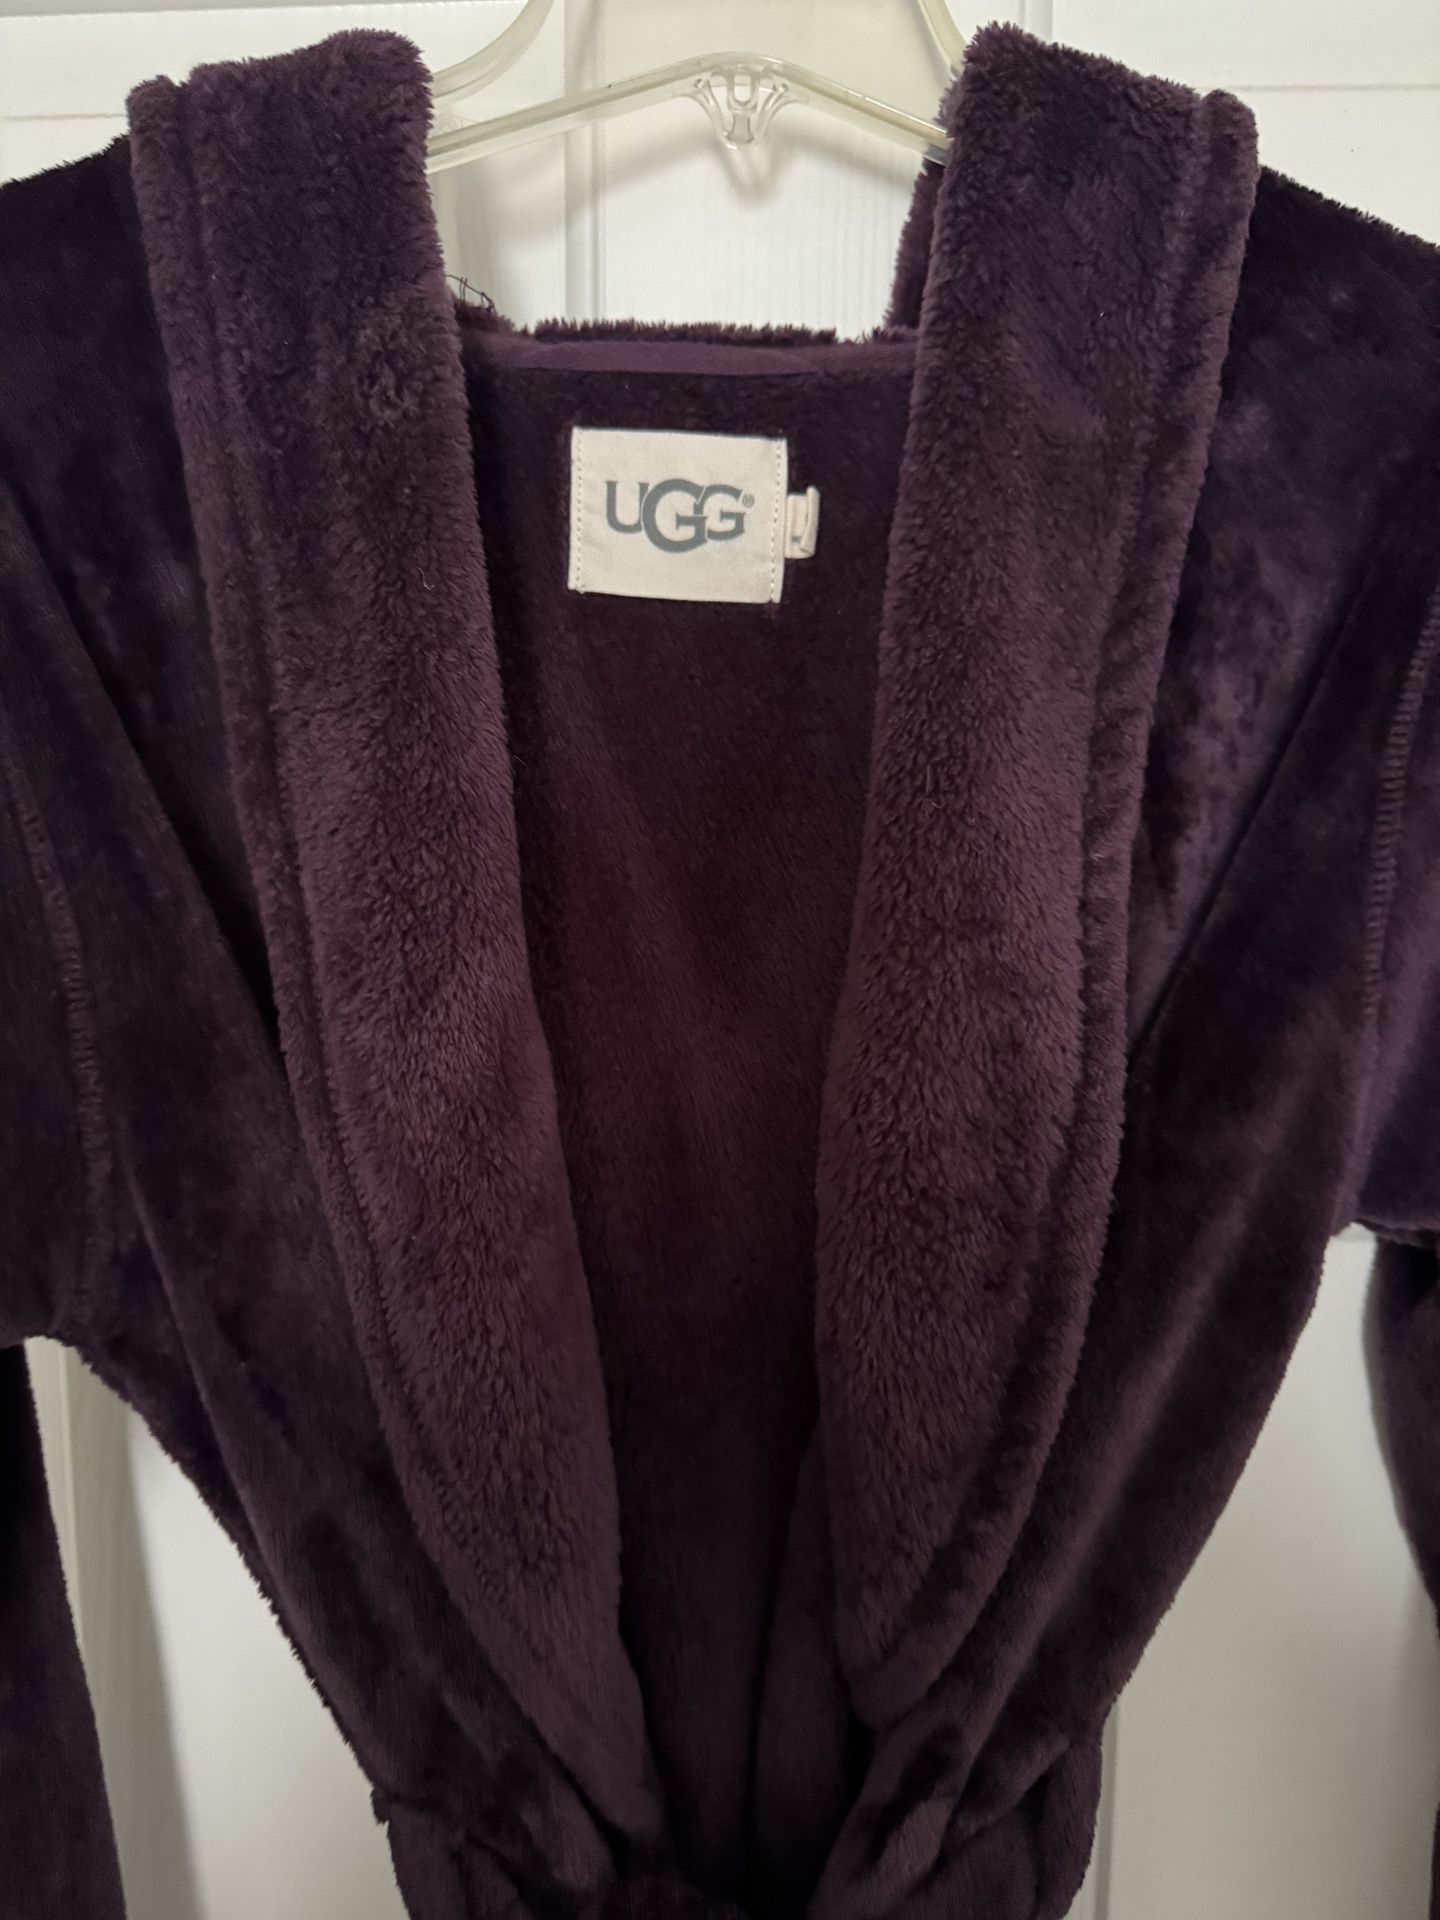 UGG Woman’s Plush Robe Size Medium 